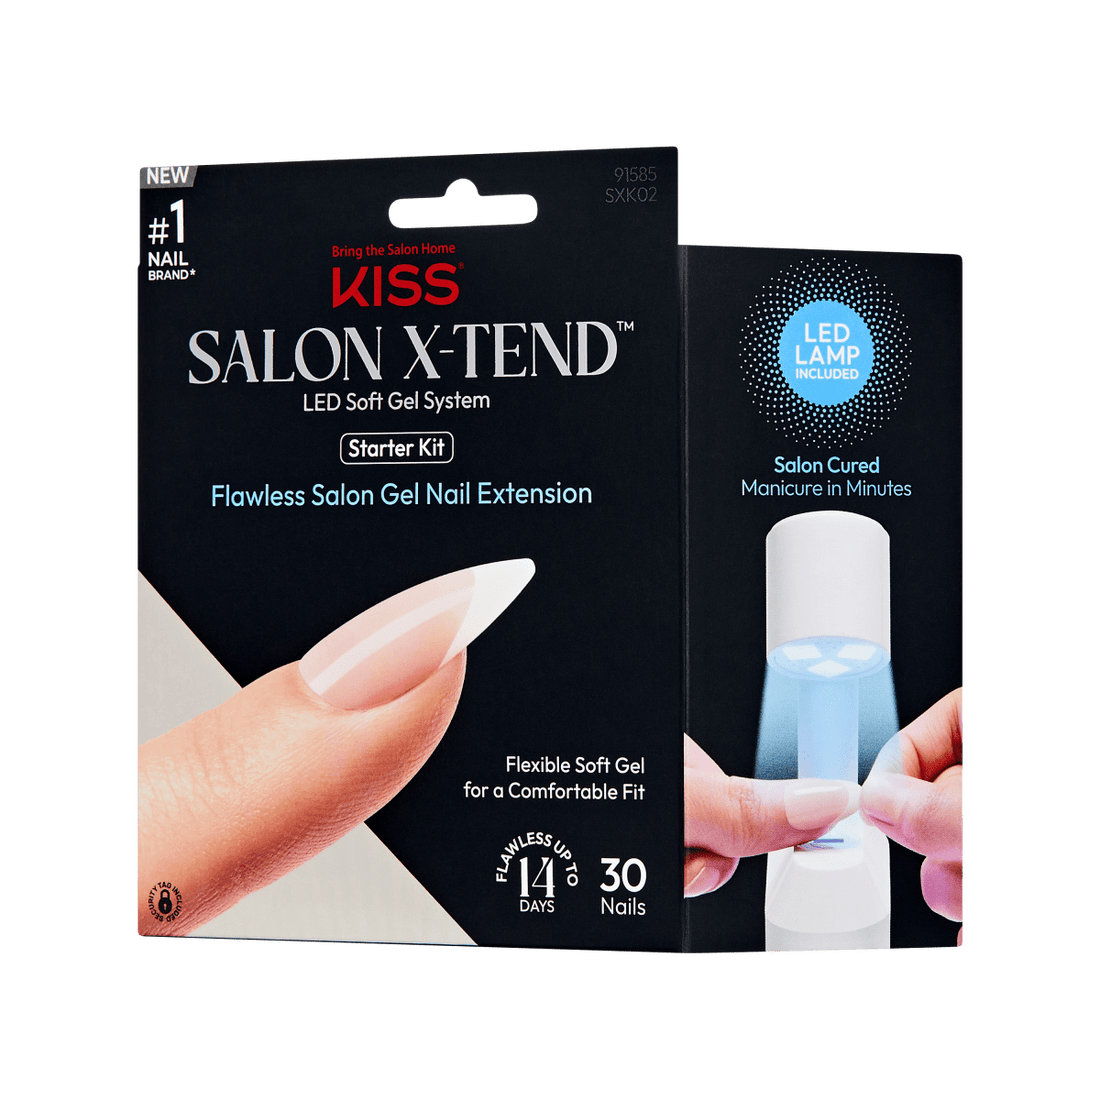 KISS Salon X-tend LED Soft Gel System– Pure